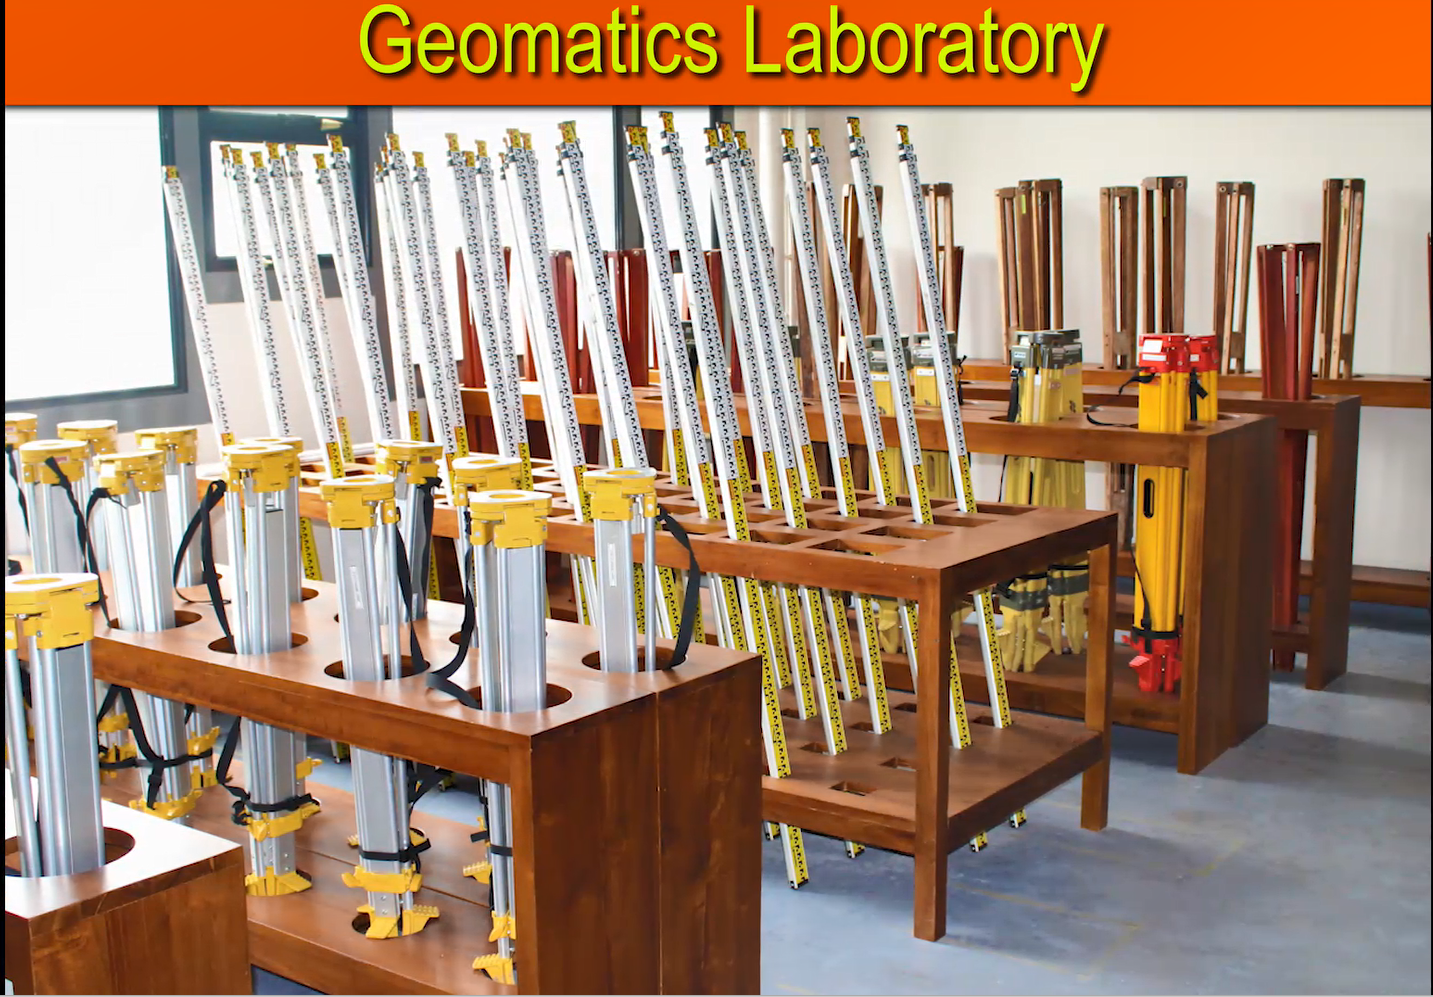 Geomatics Laboratory